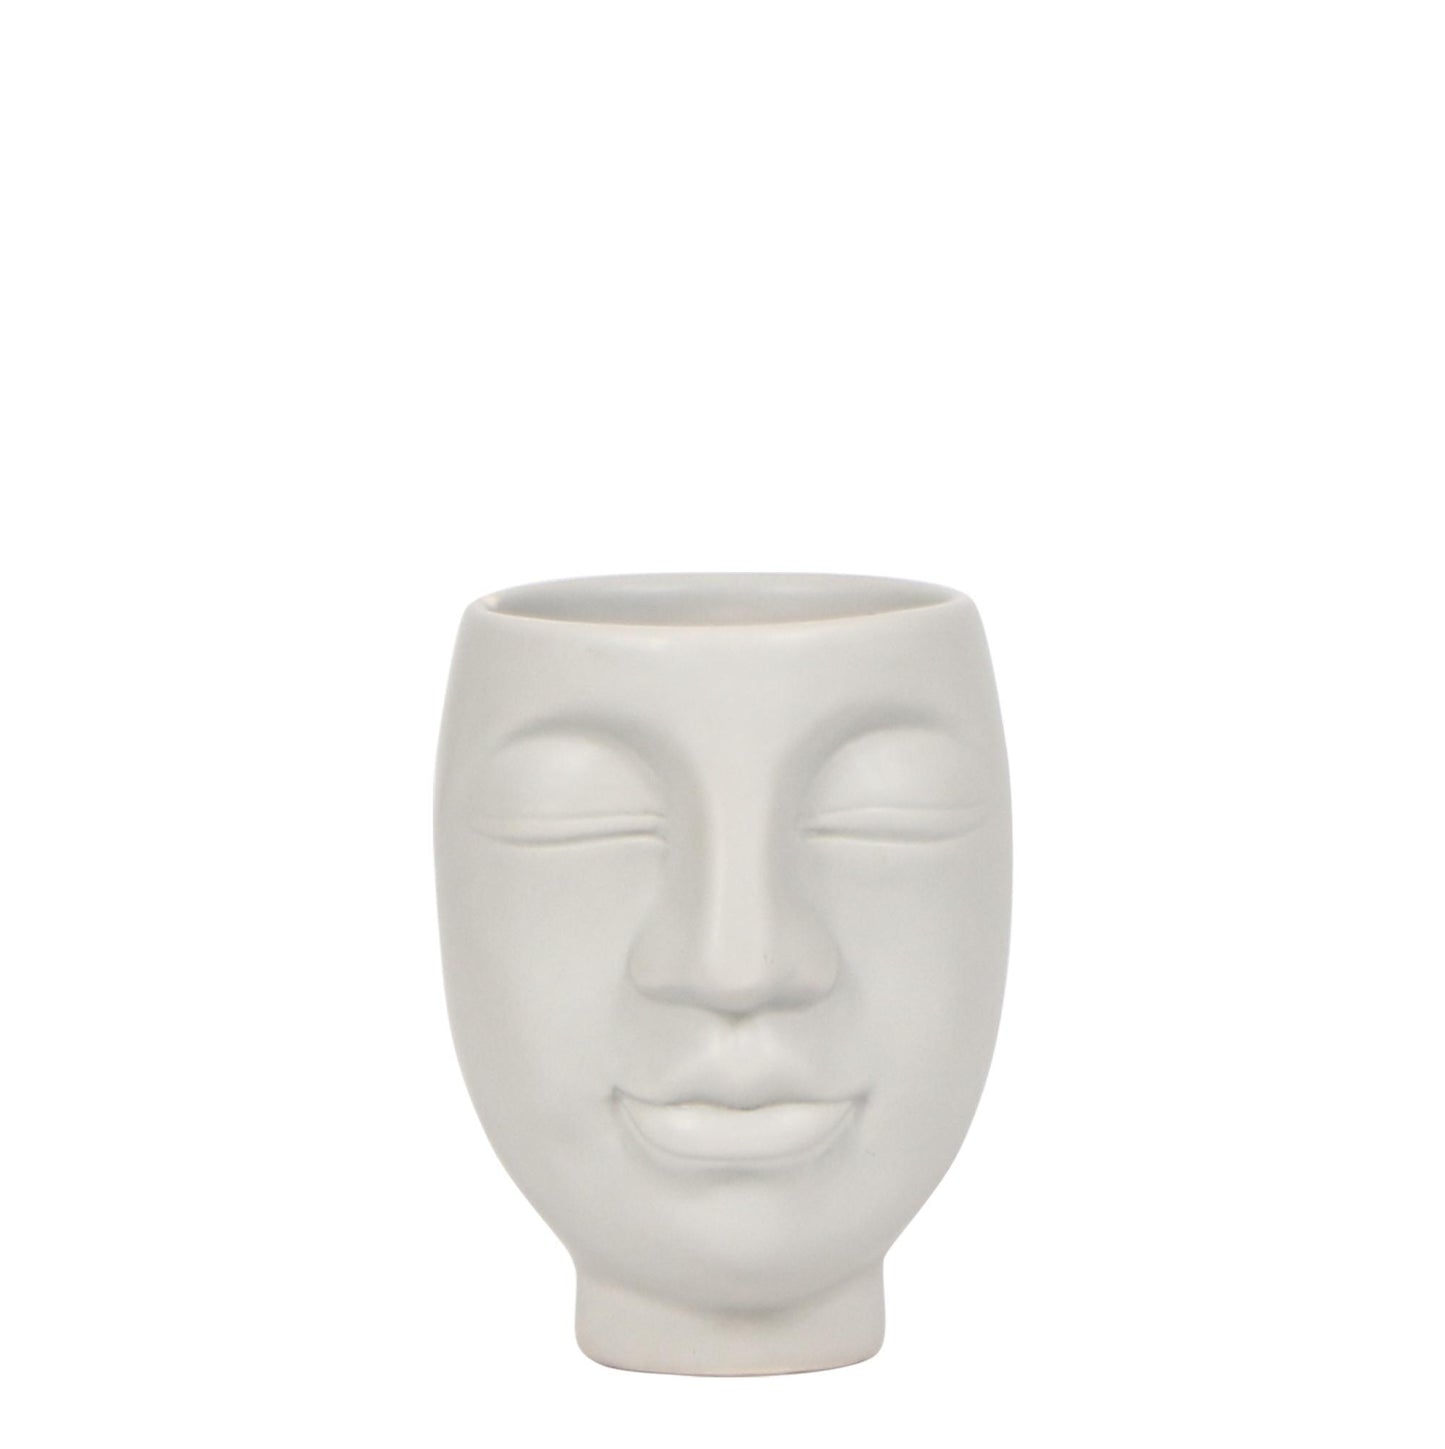 Hummingbird Home | Face to face flowerpot - Gray ceramic decorative pot - pot size Ø6cm